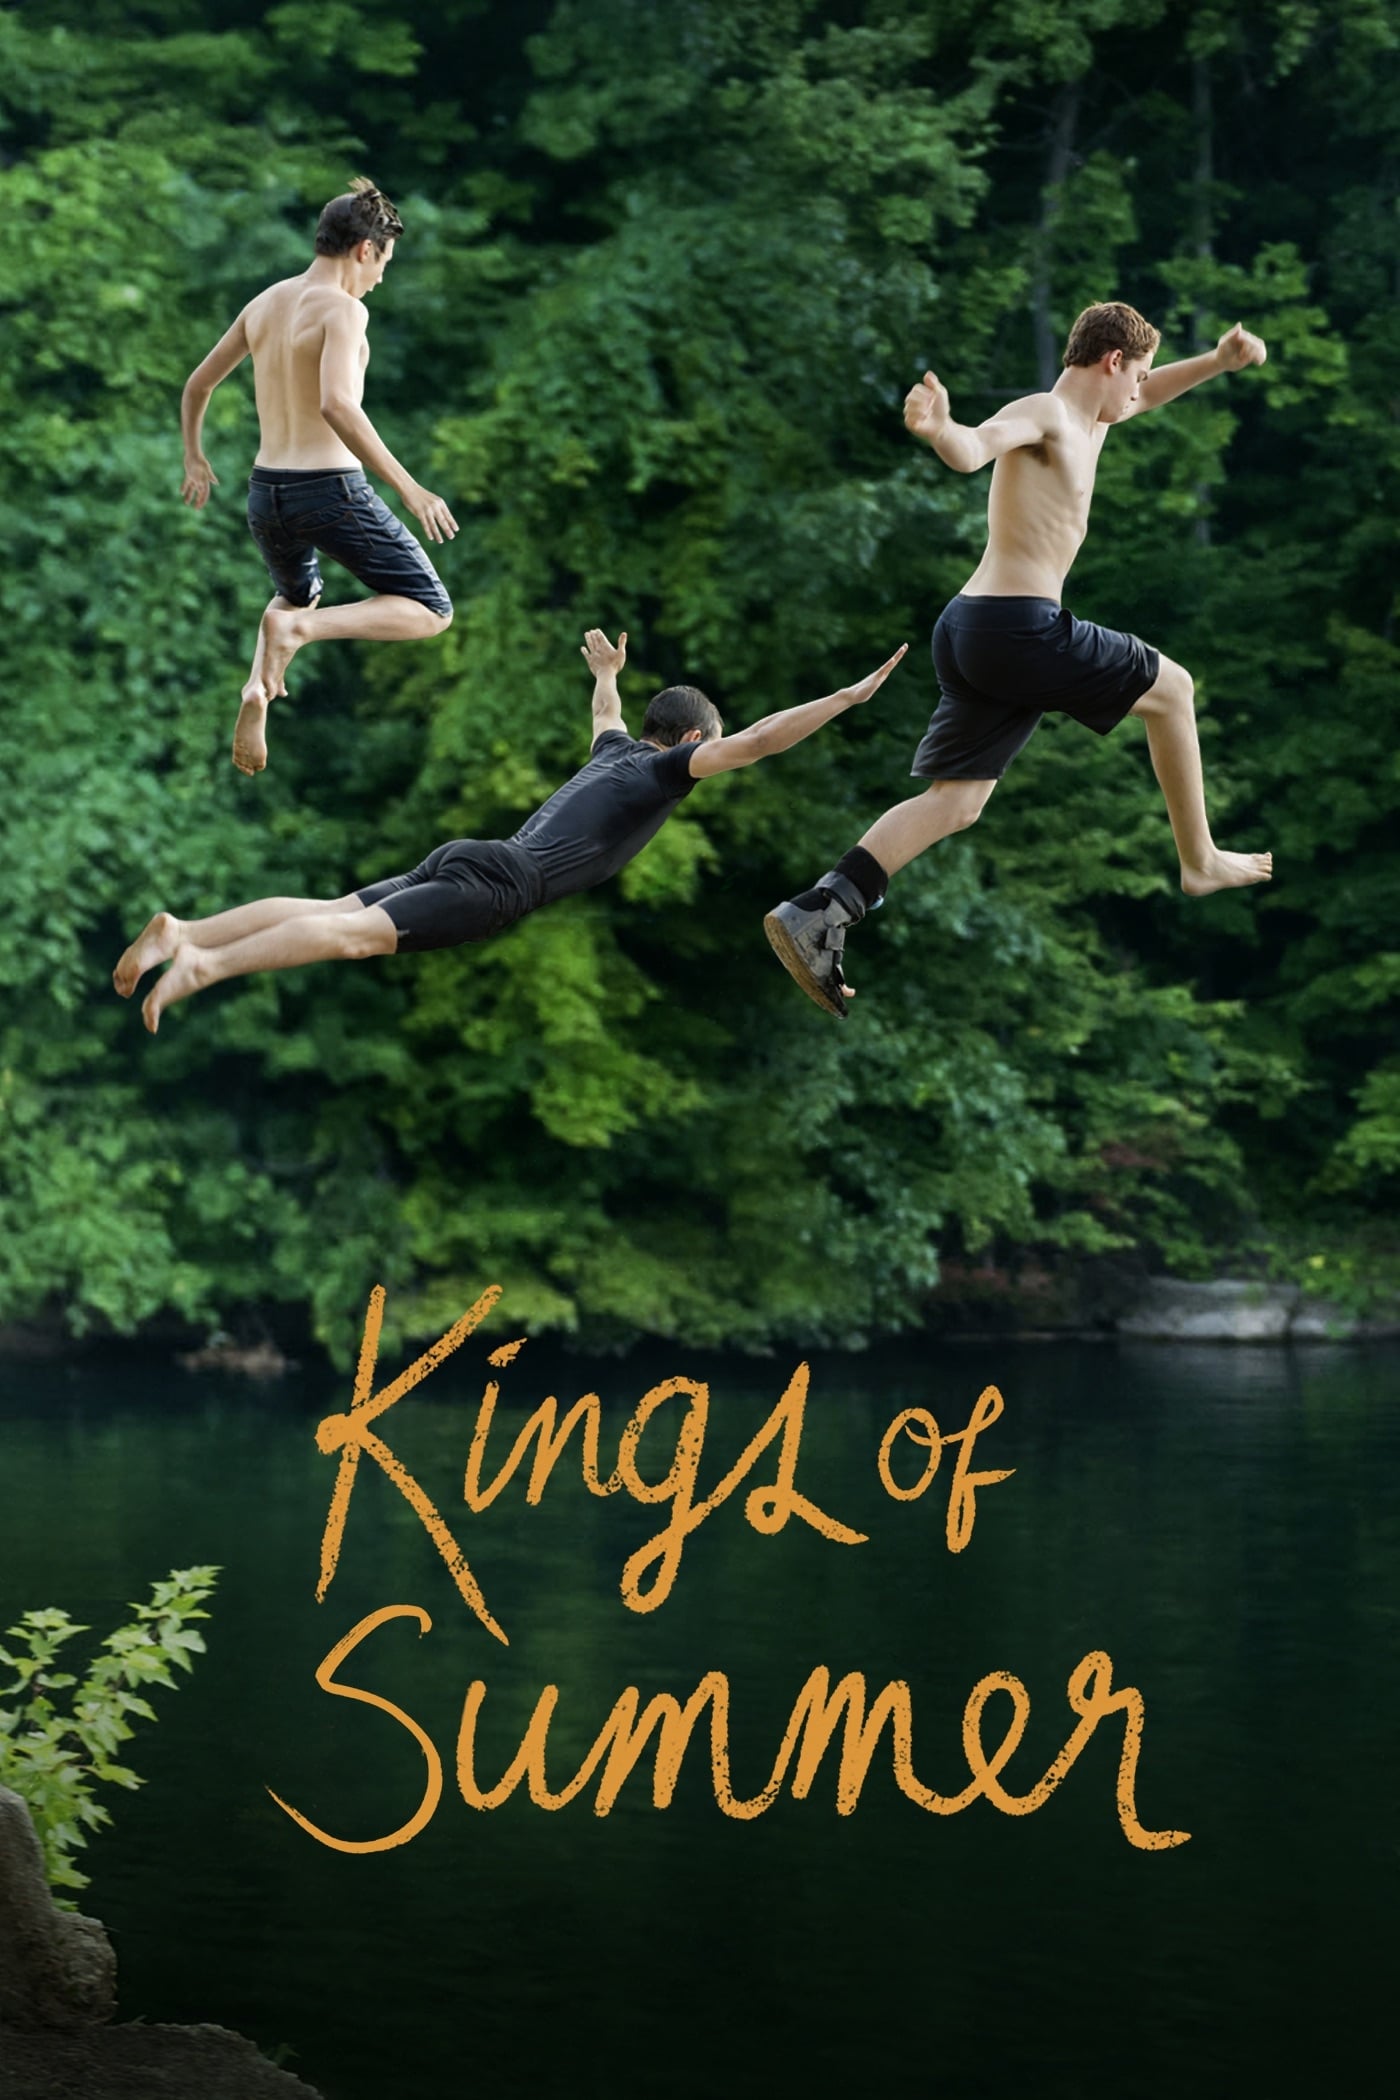 The Kings of Summer [Sub-ITA] (2013)